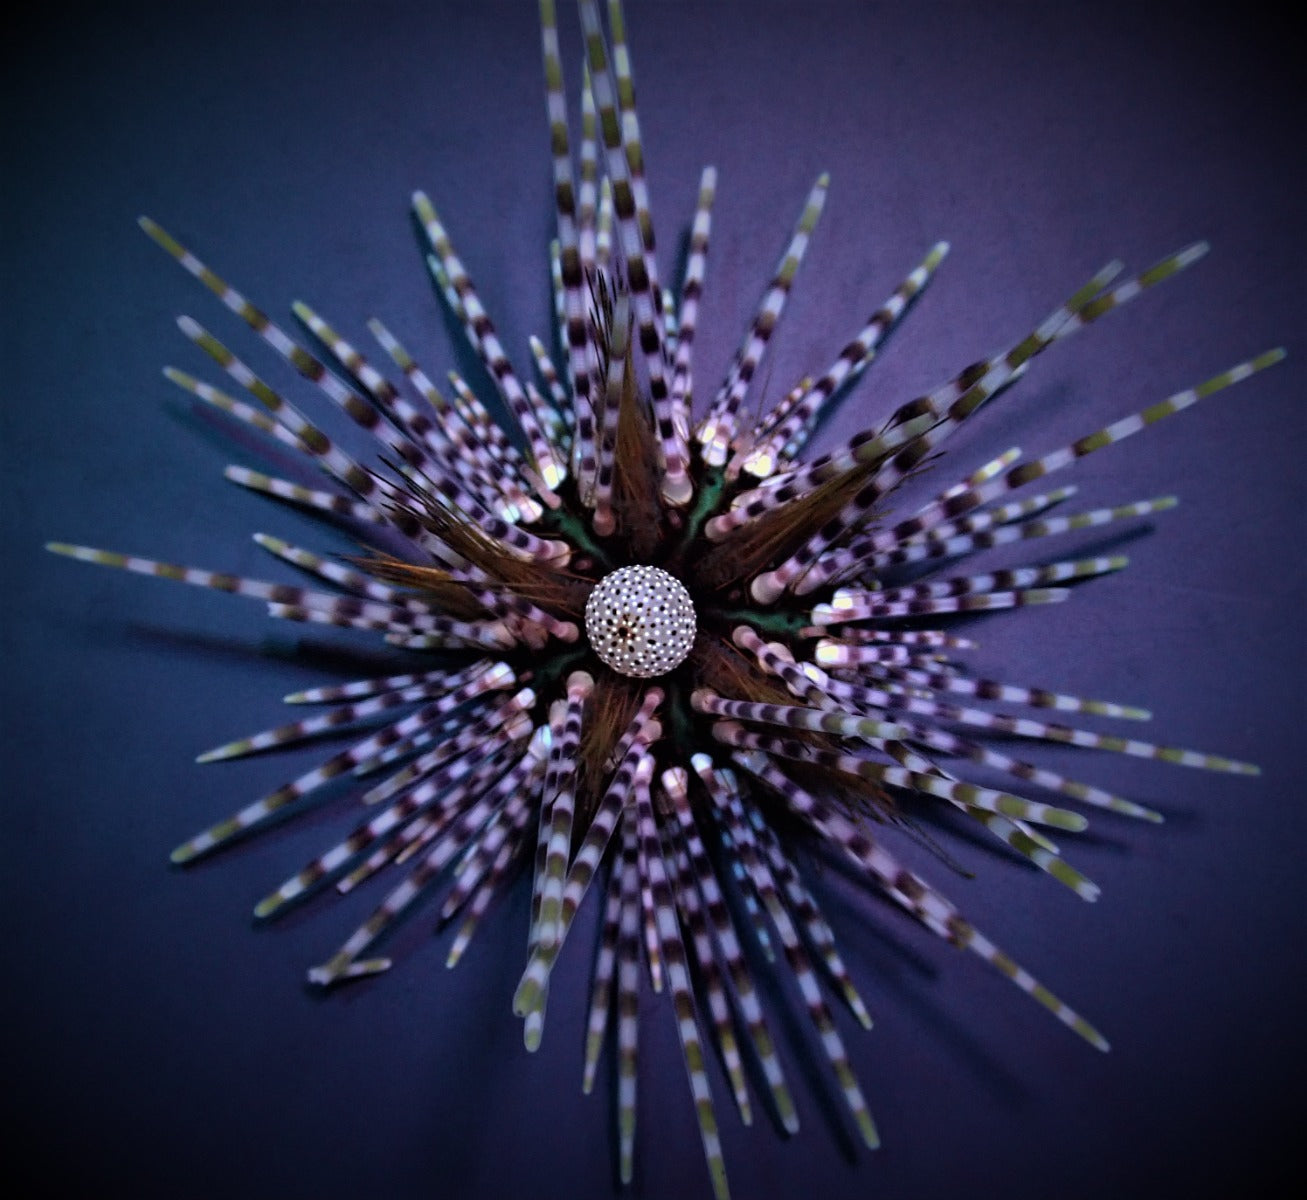 Echinothrix calamaris - Double spined urchin